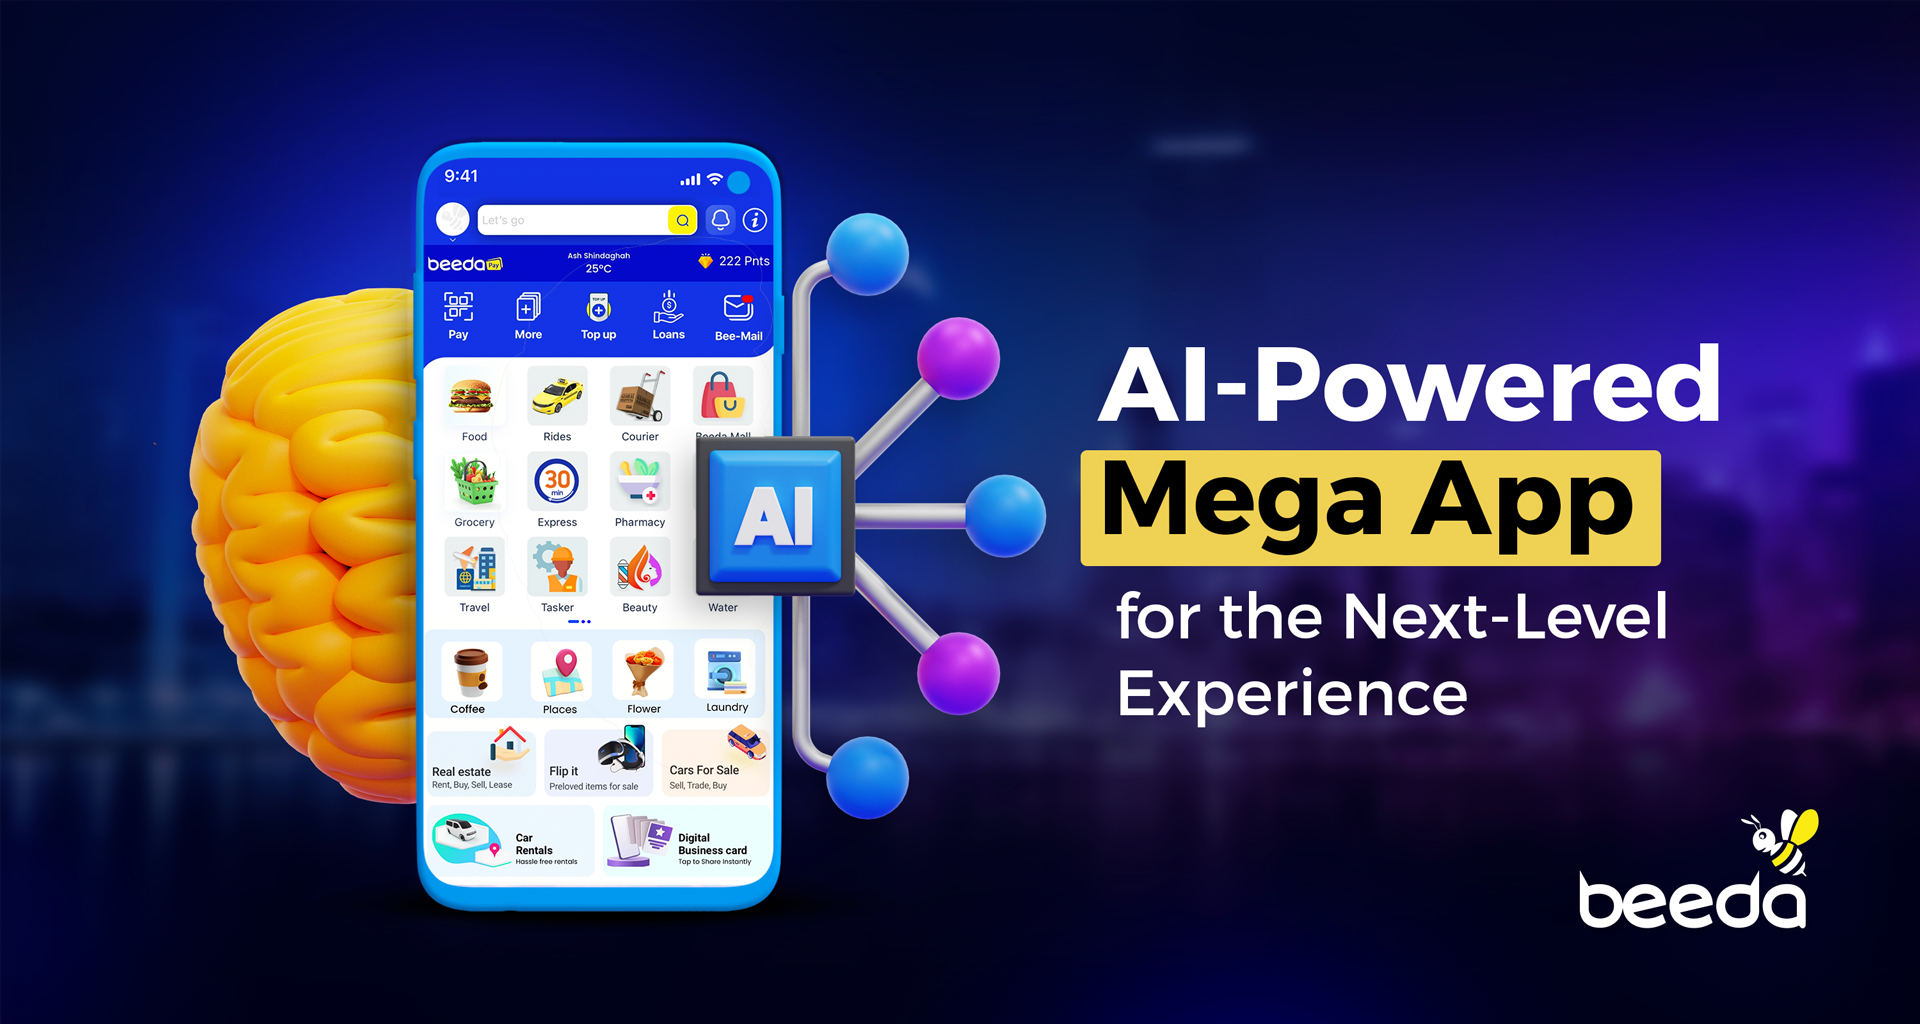 Beeda: AI-Powered Mega App for the Next-Level Experience